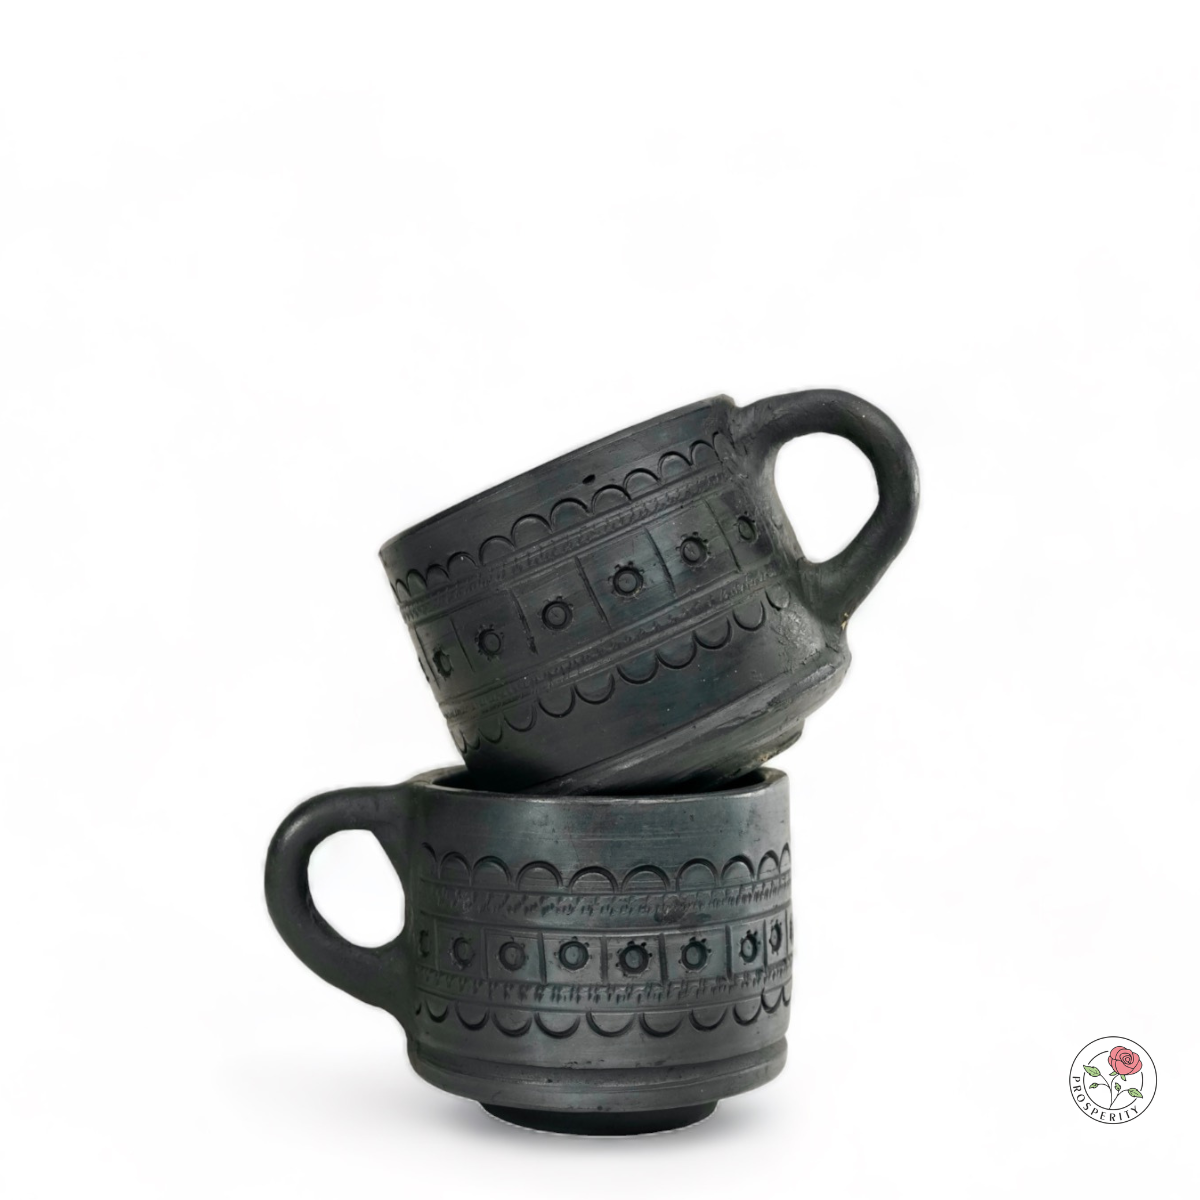 Sawai Madhopur Black Pottery Tea/coffee cups - Set of 2